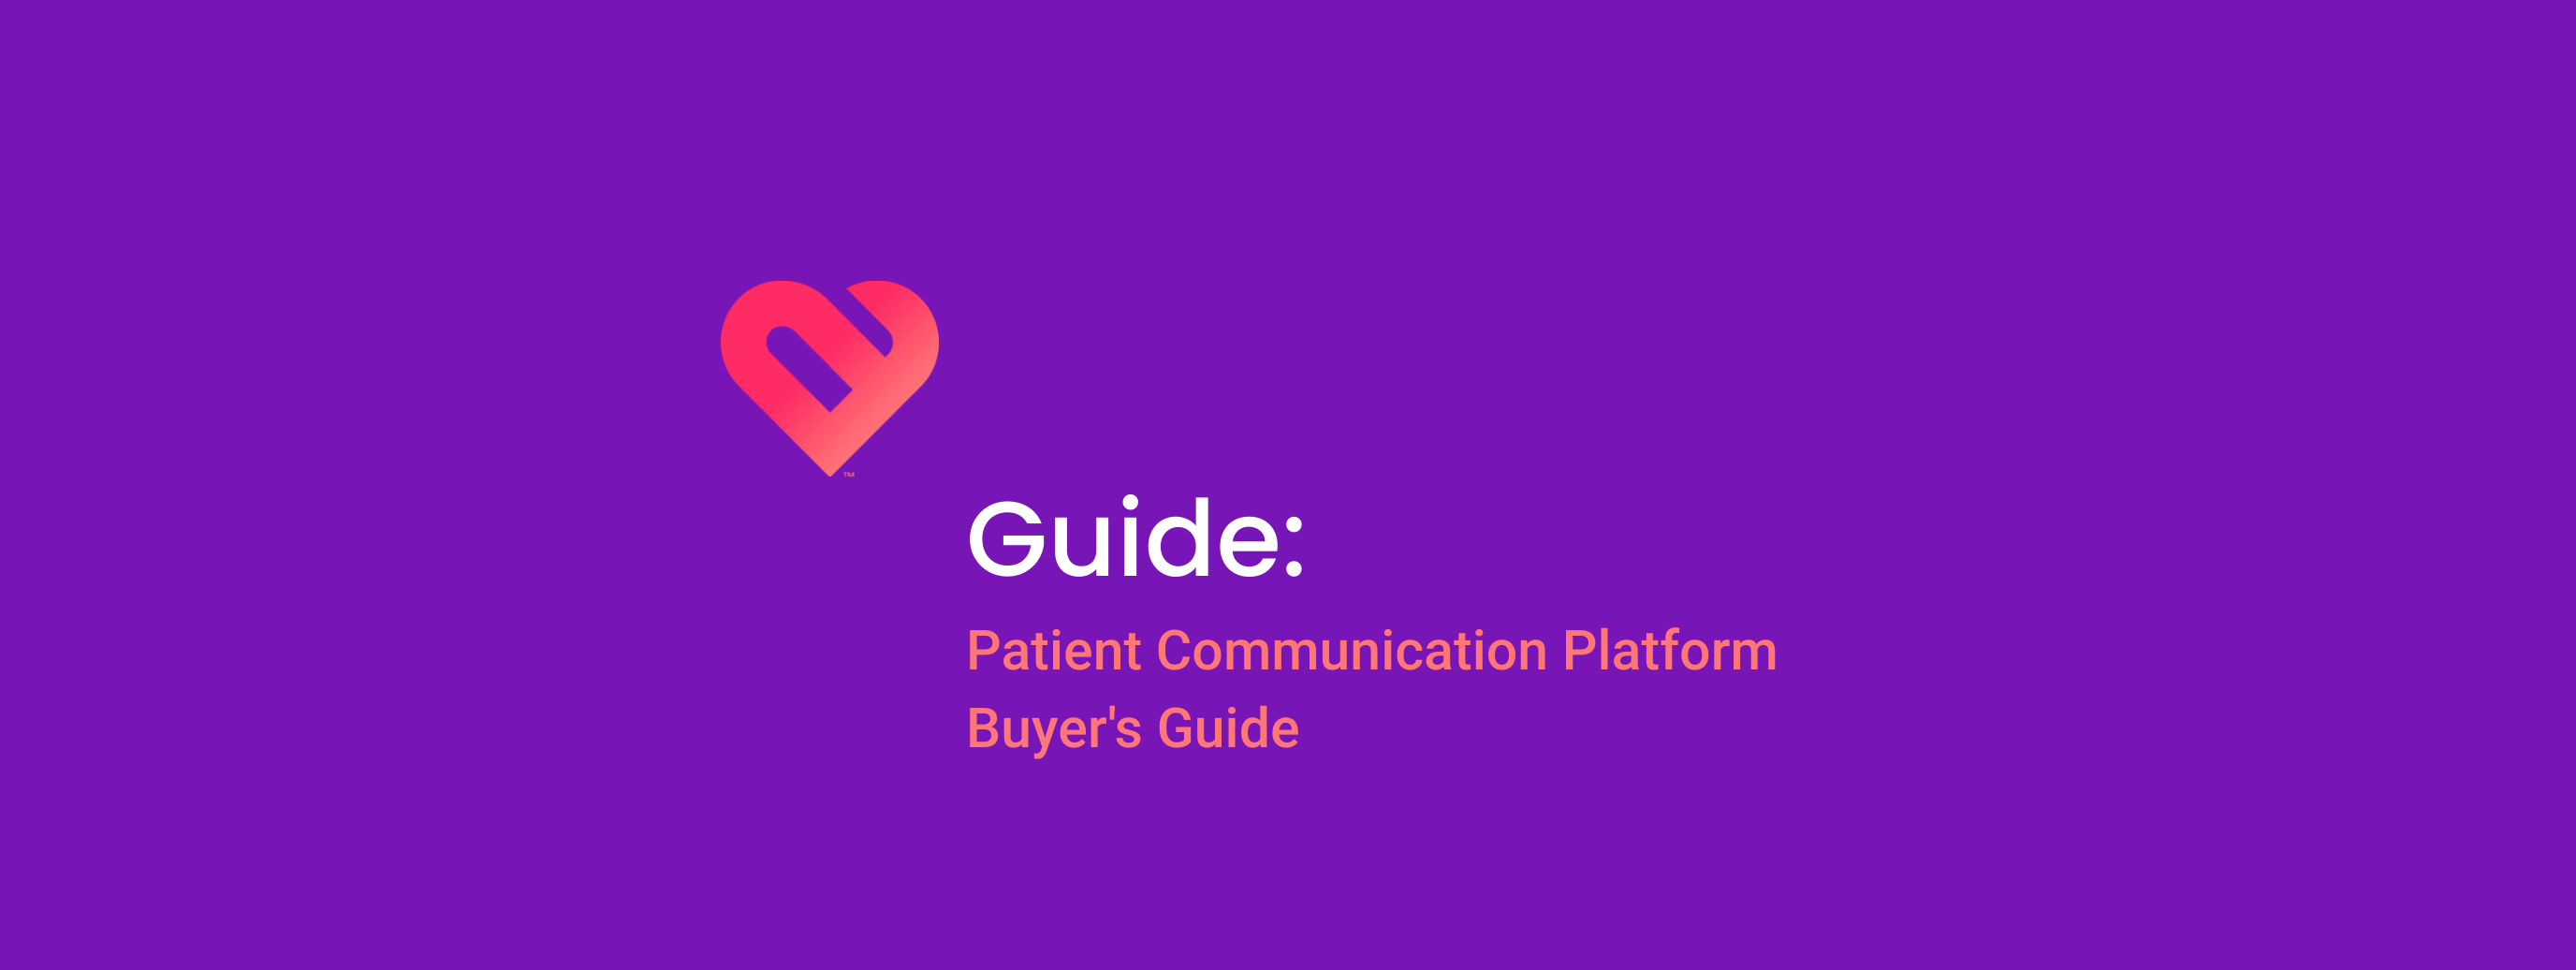 Patient Communication Platform Buyer's Guid header